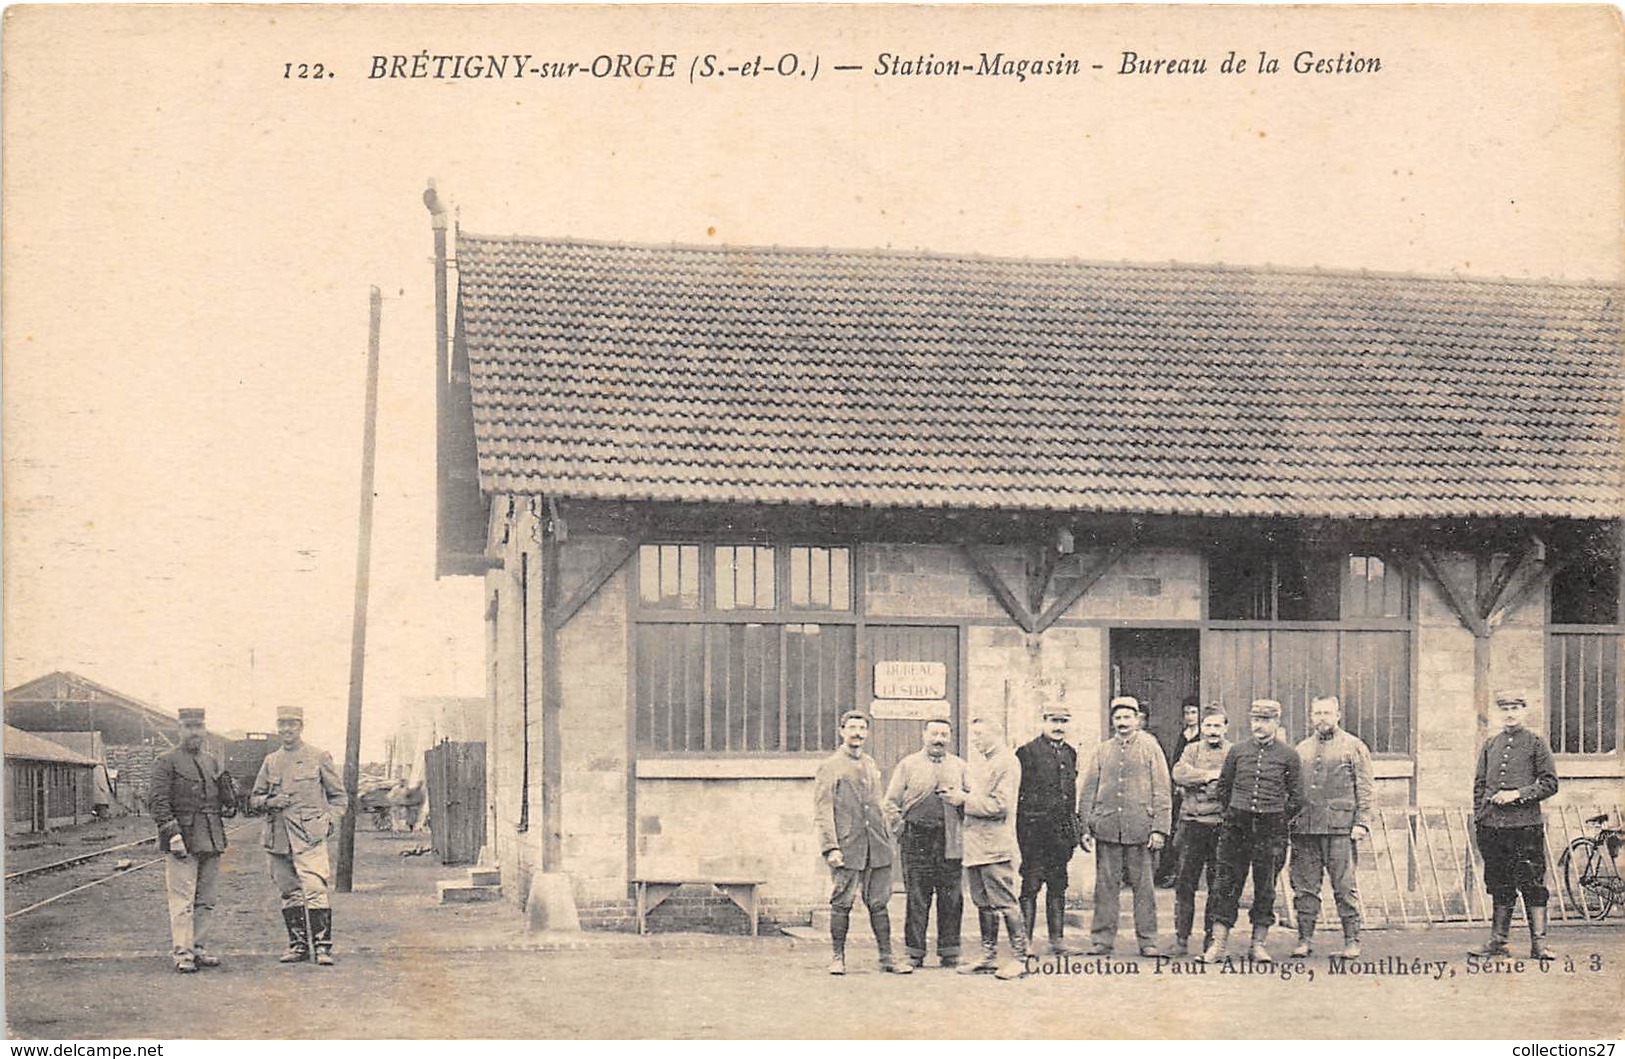 91-BRETIGNY-SUR-ORGE- STATION- MAGASIN, BUREAU DE LA GESTION - Bretigny Sur Orge